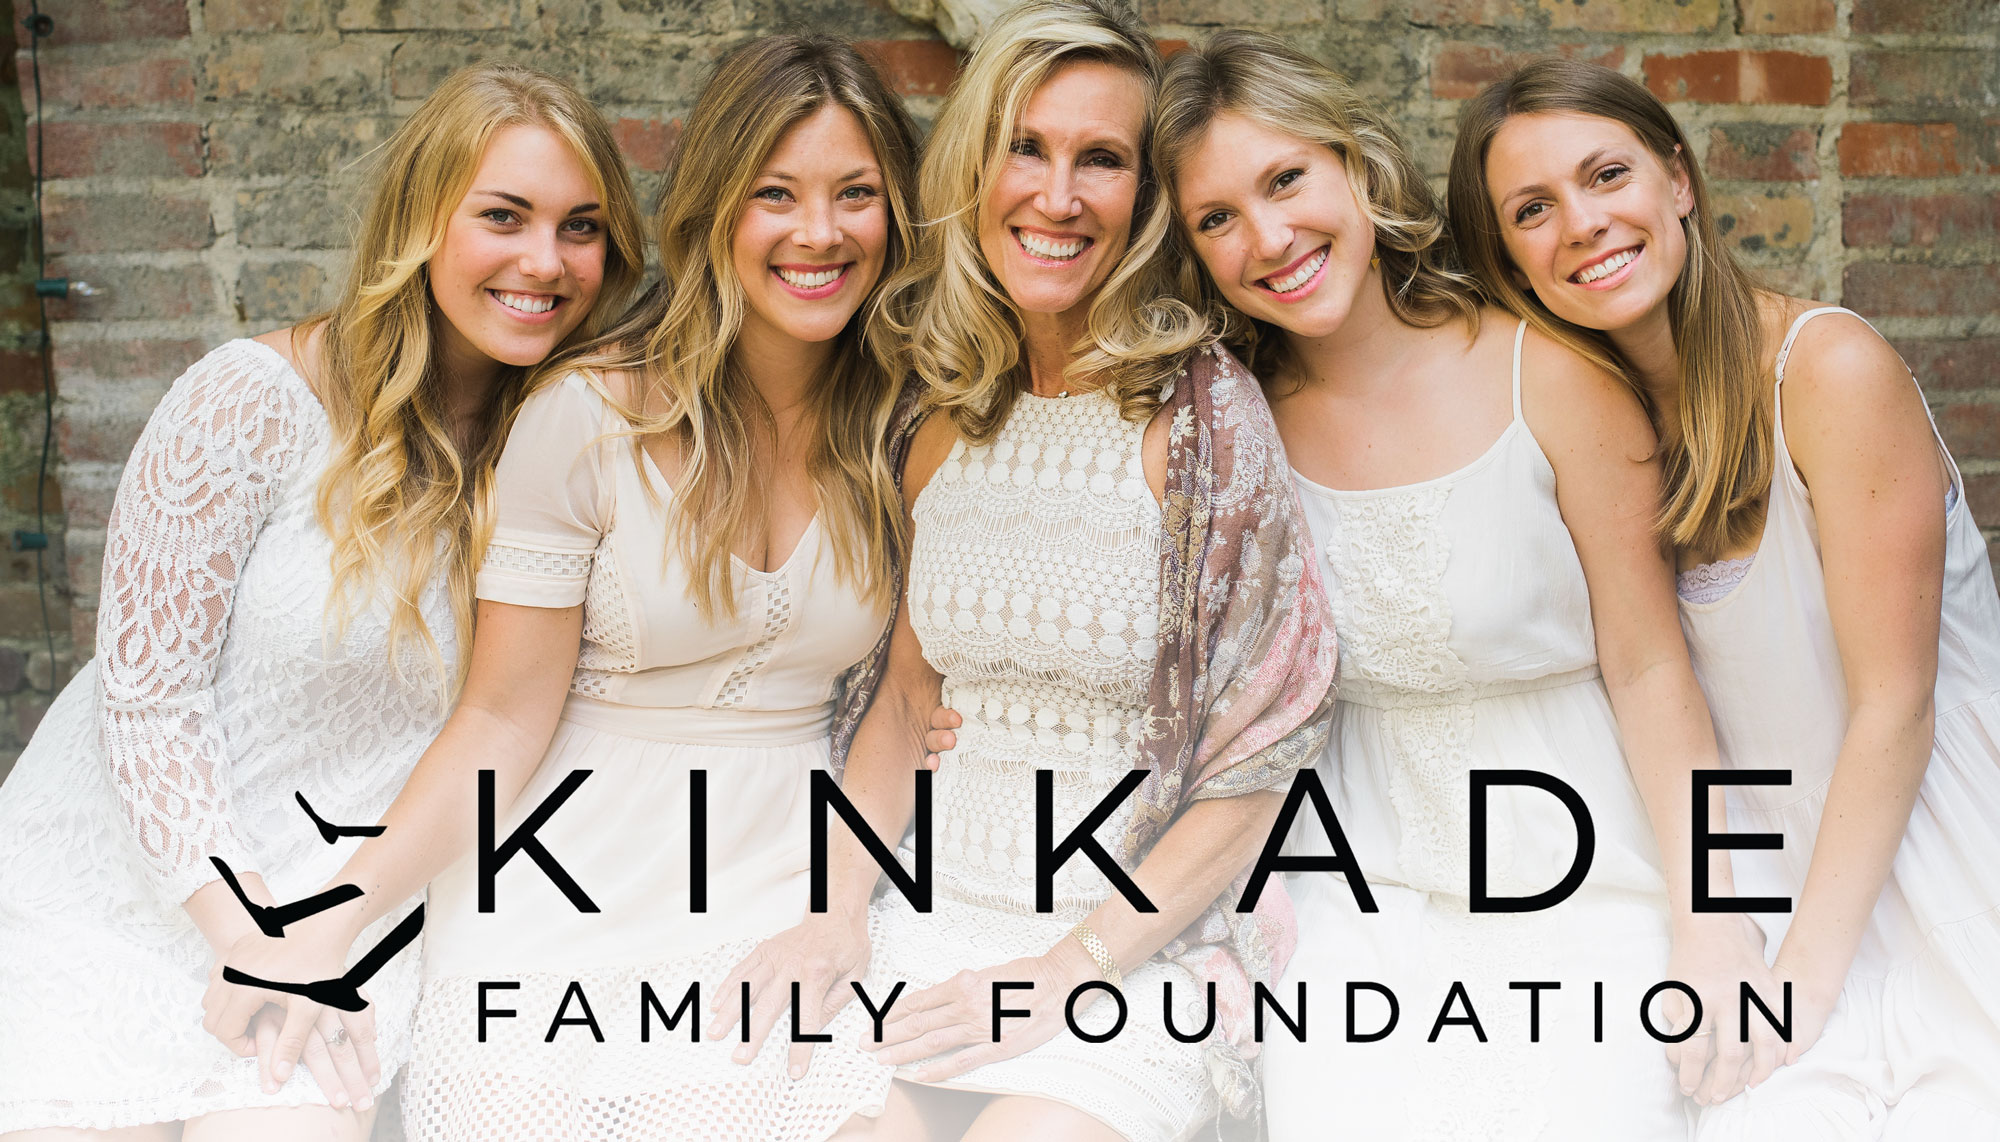 The Kinkade Family Foundation - Thomas Kinkade Studios